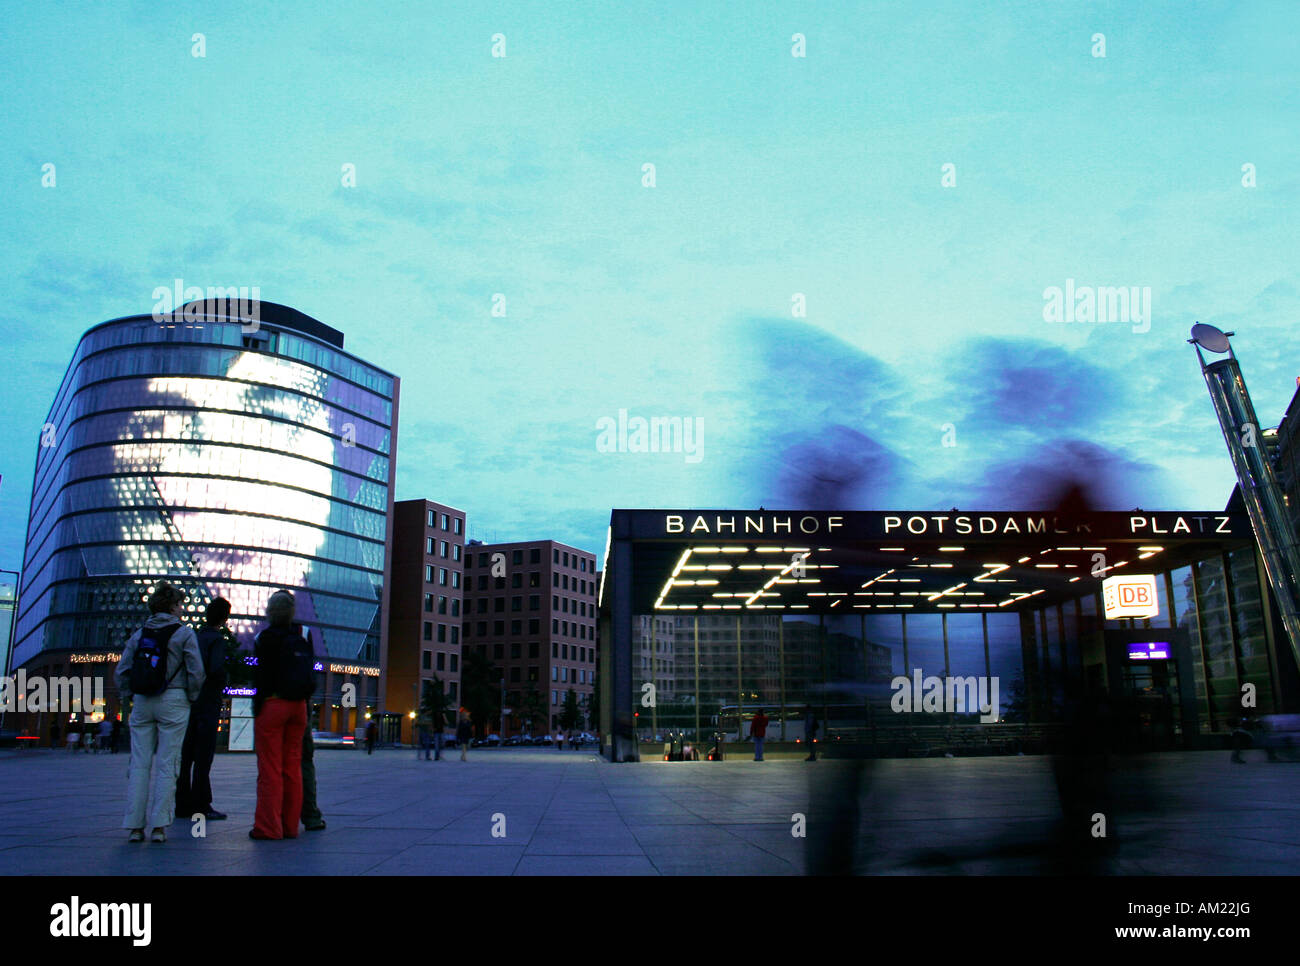 Potsdamer Platz, building with light installation, Berlin, Germany Stock Photo